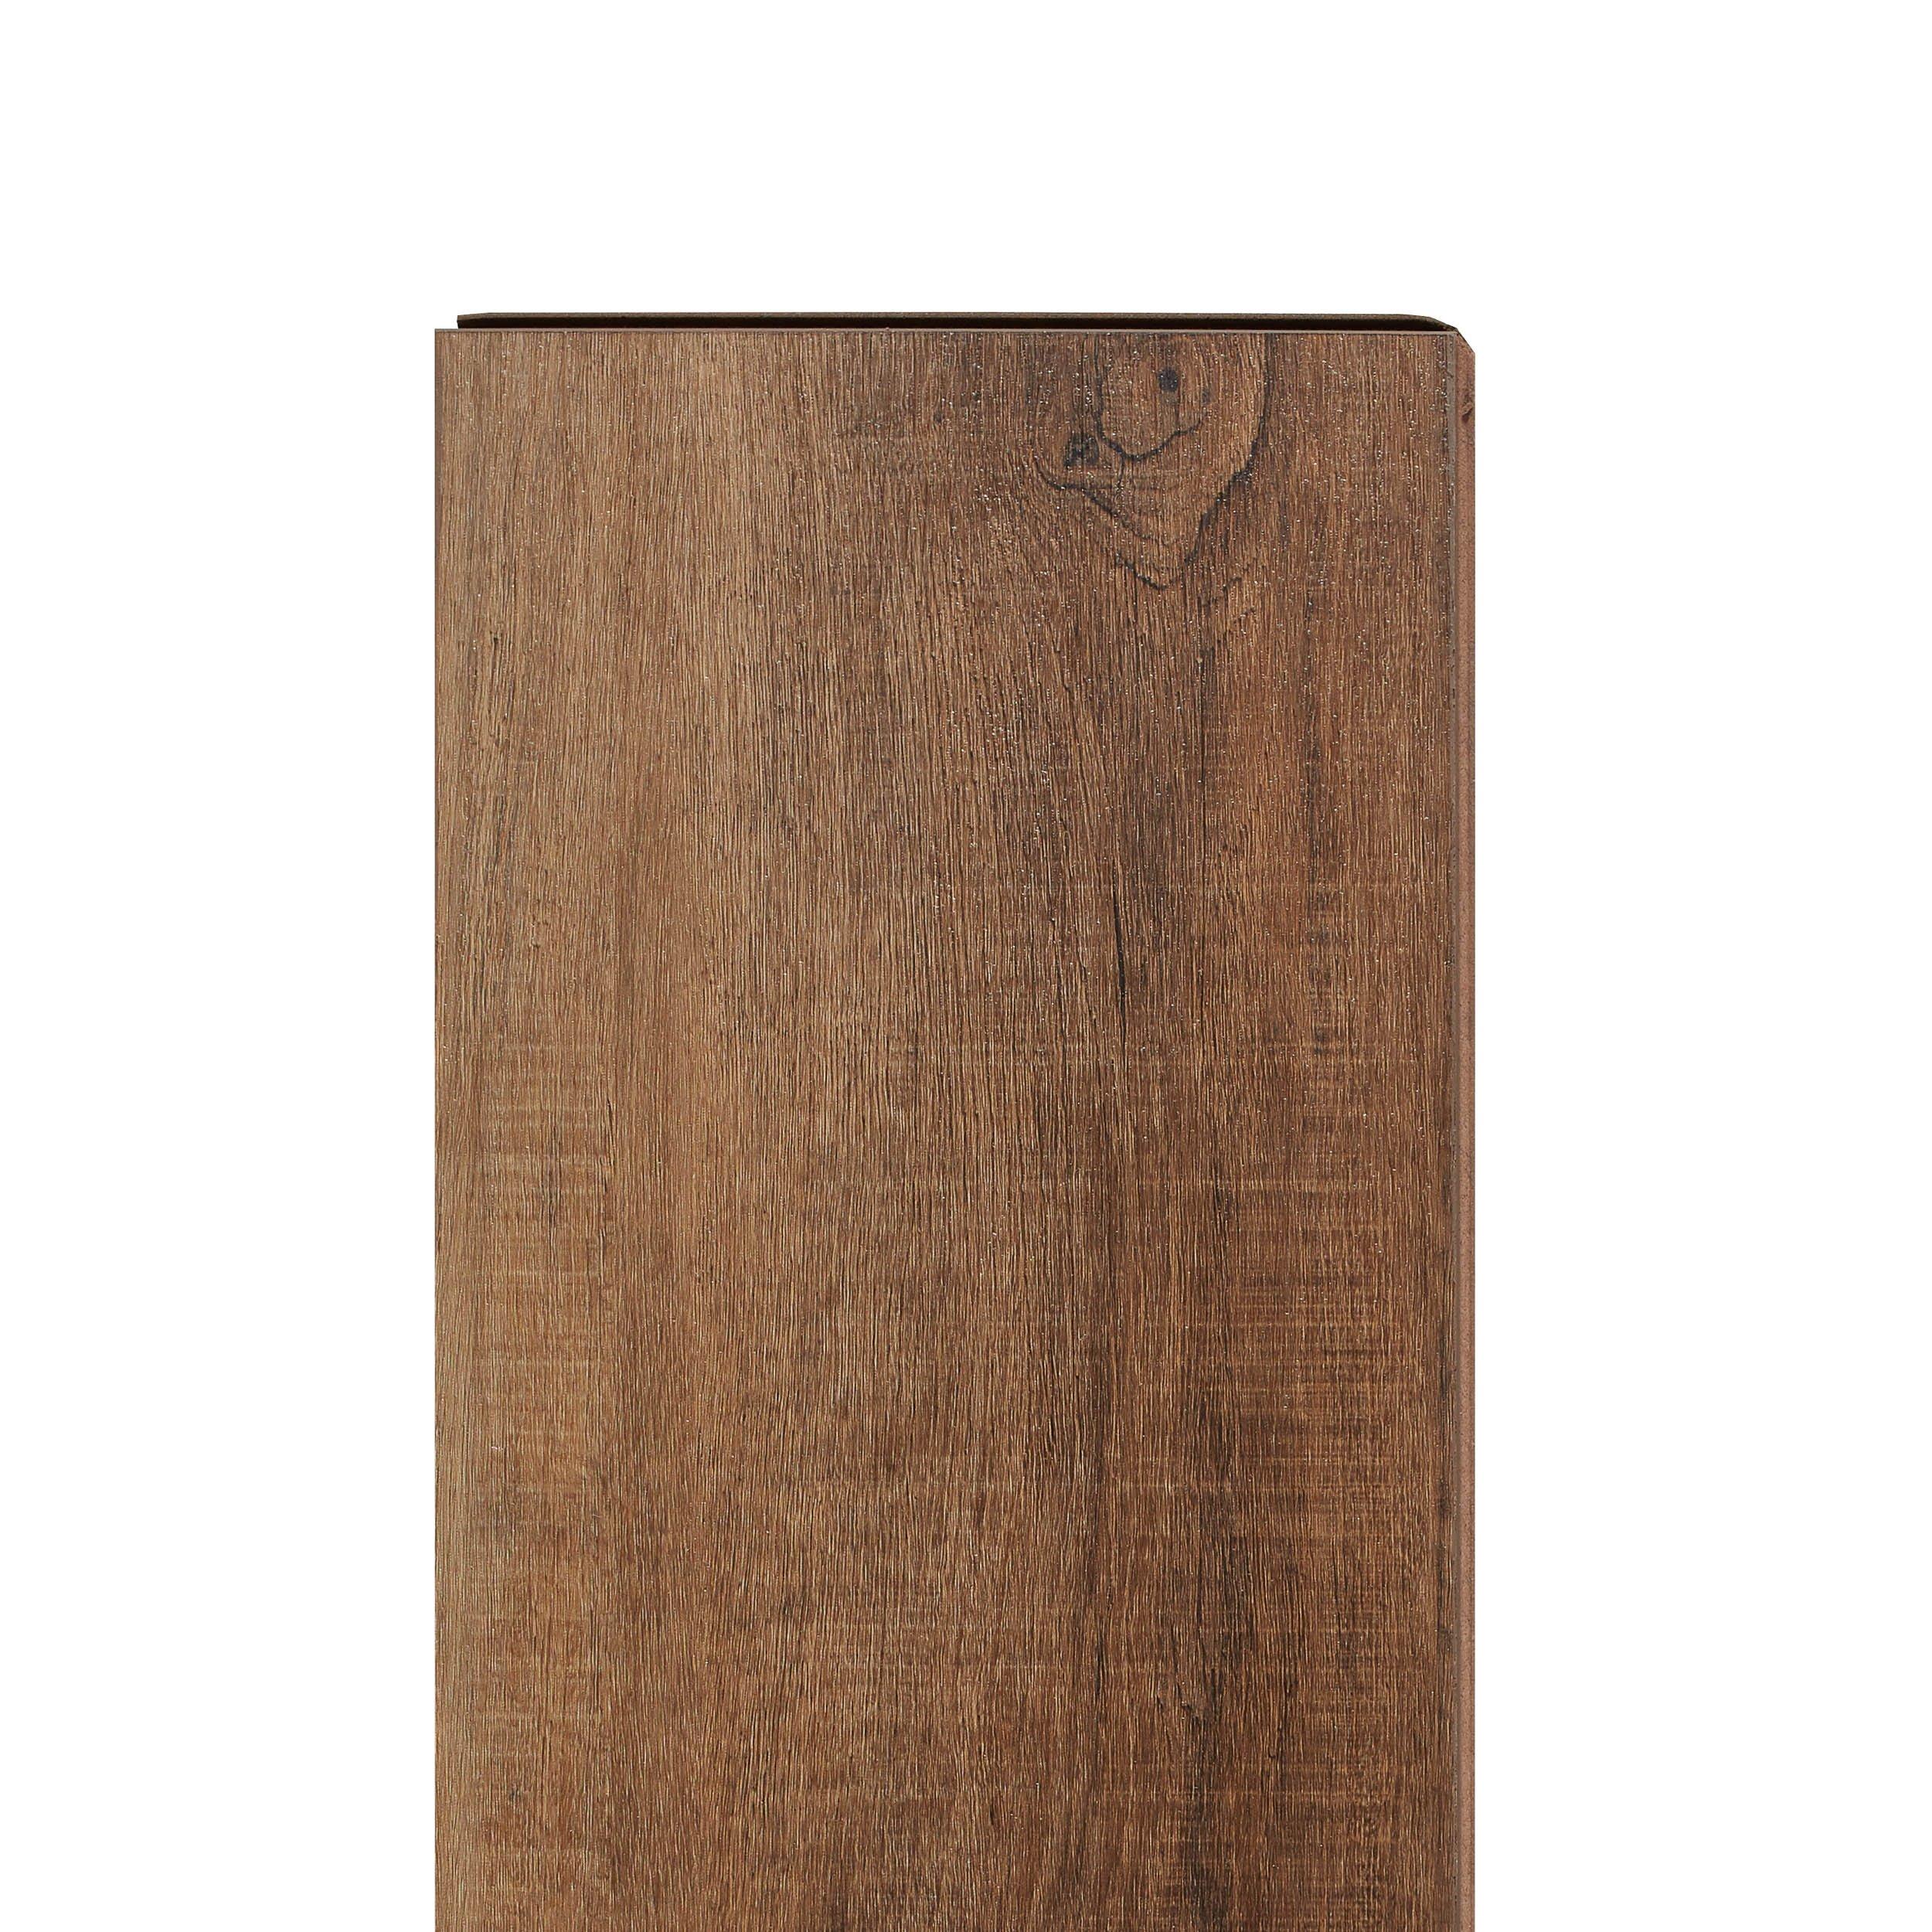 Titan Auburn Rigid Core Luxury Vinyl Plank Cork Back